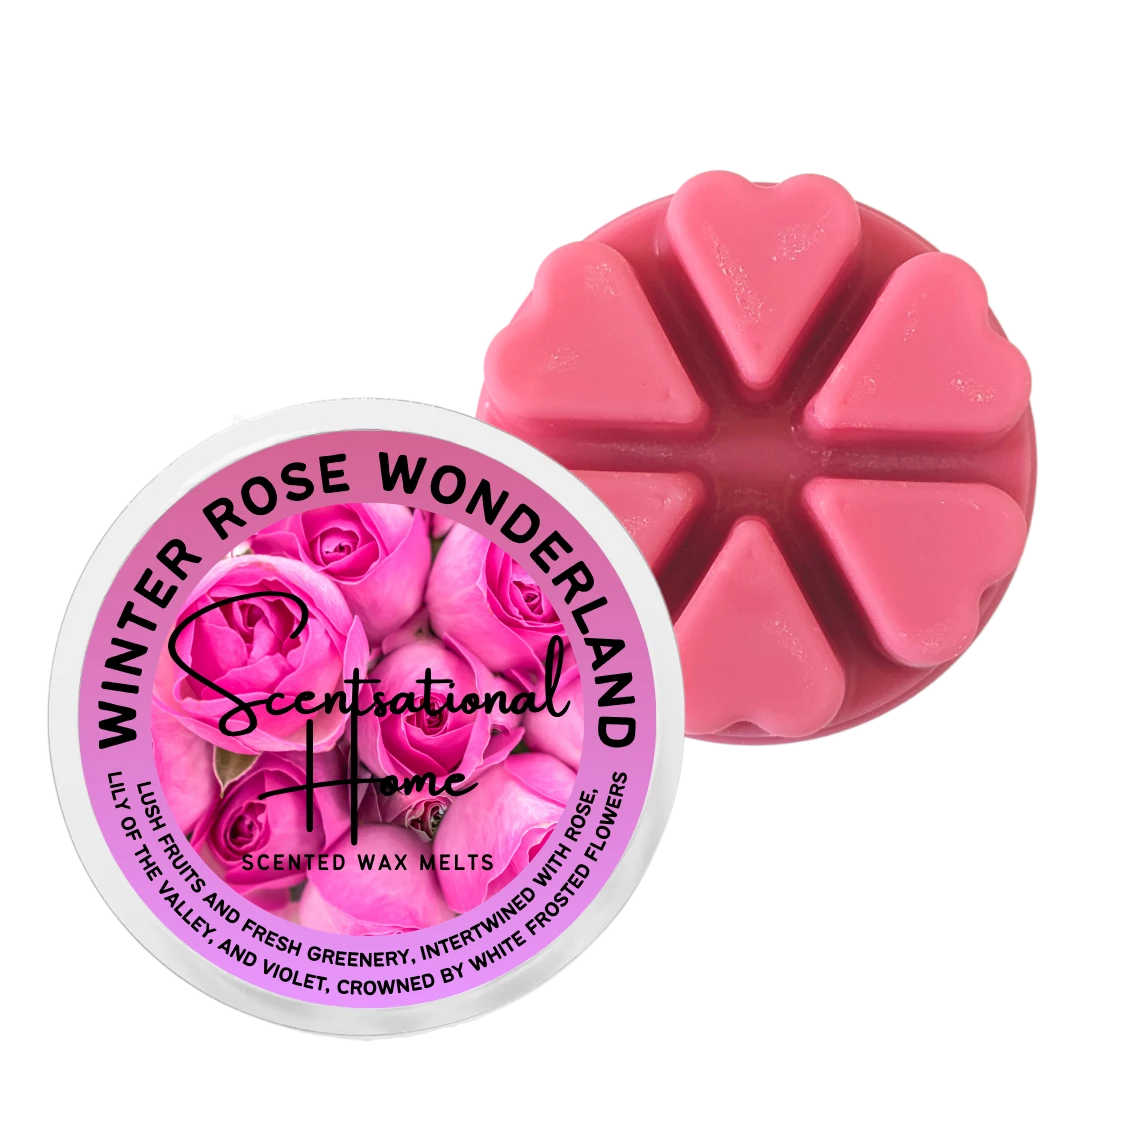 Winter Rose Wonderland Wax Melt